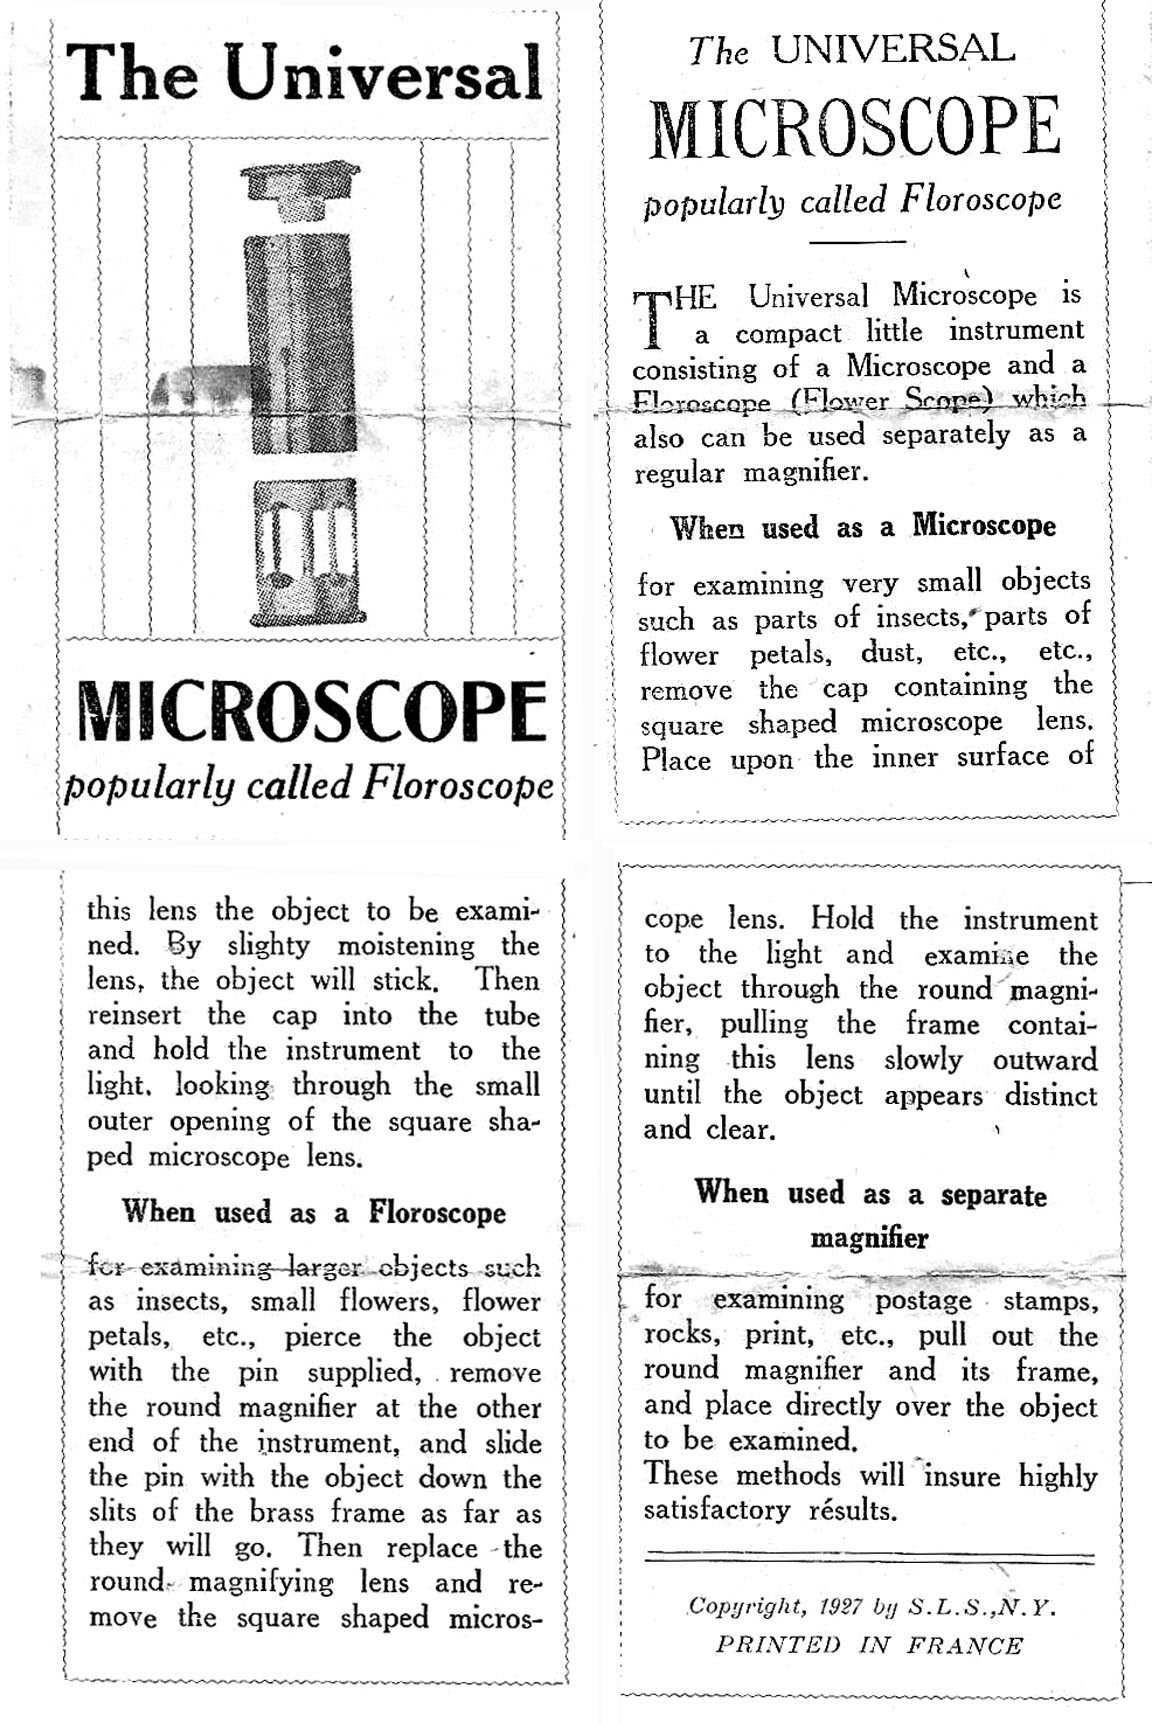 microfloro instructions